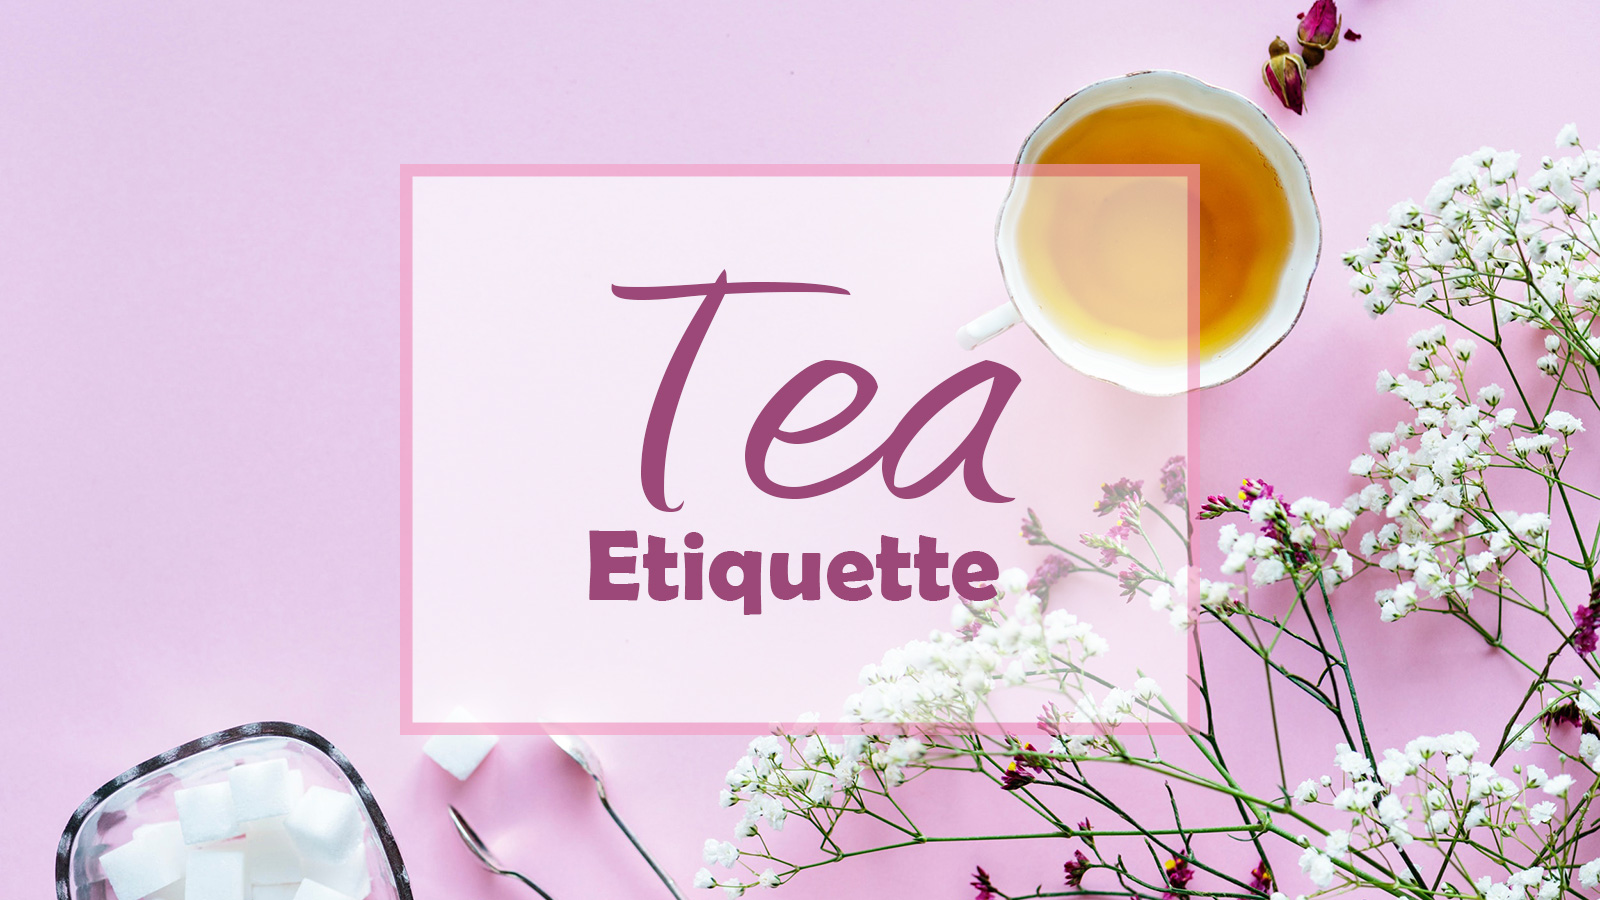 https://www.etiquettescholar.com/images/dining_etiquette/tea_etiquette/thumbnail-tea-etiquette-16x9.jpg